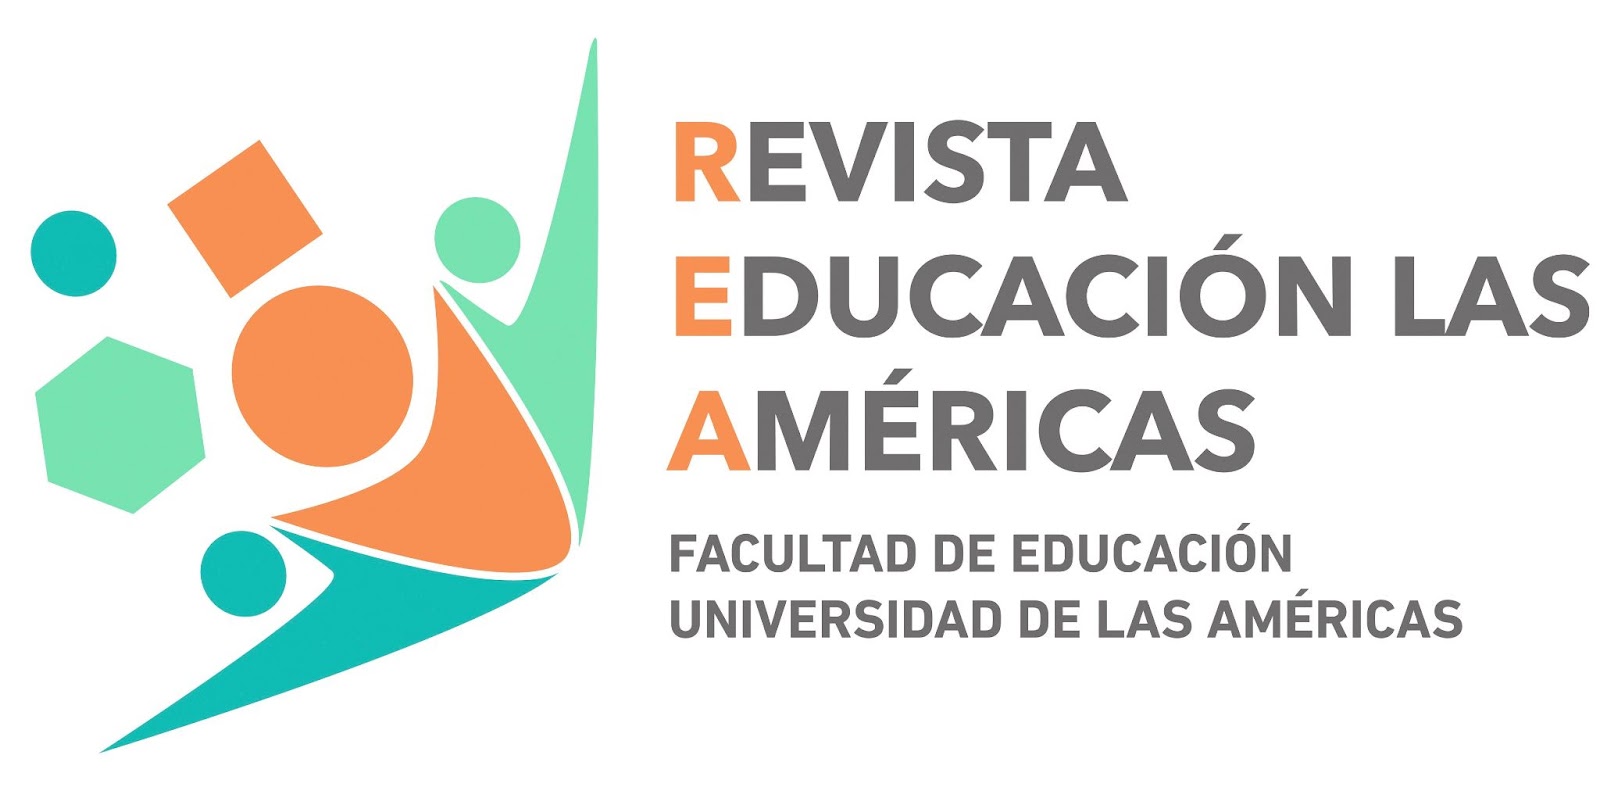 Universidad de las Américas Education Journal, Chile